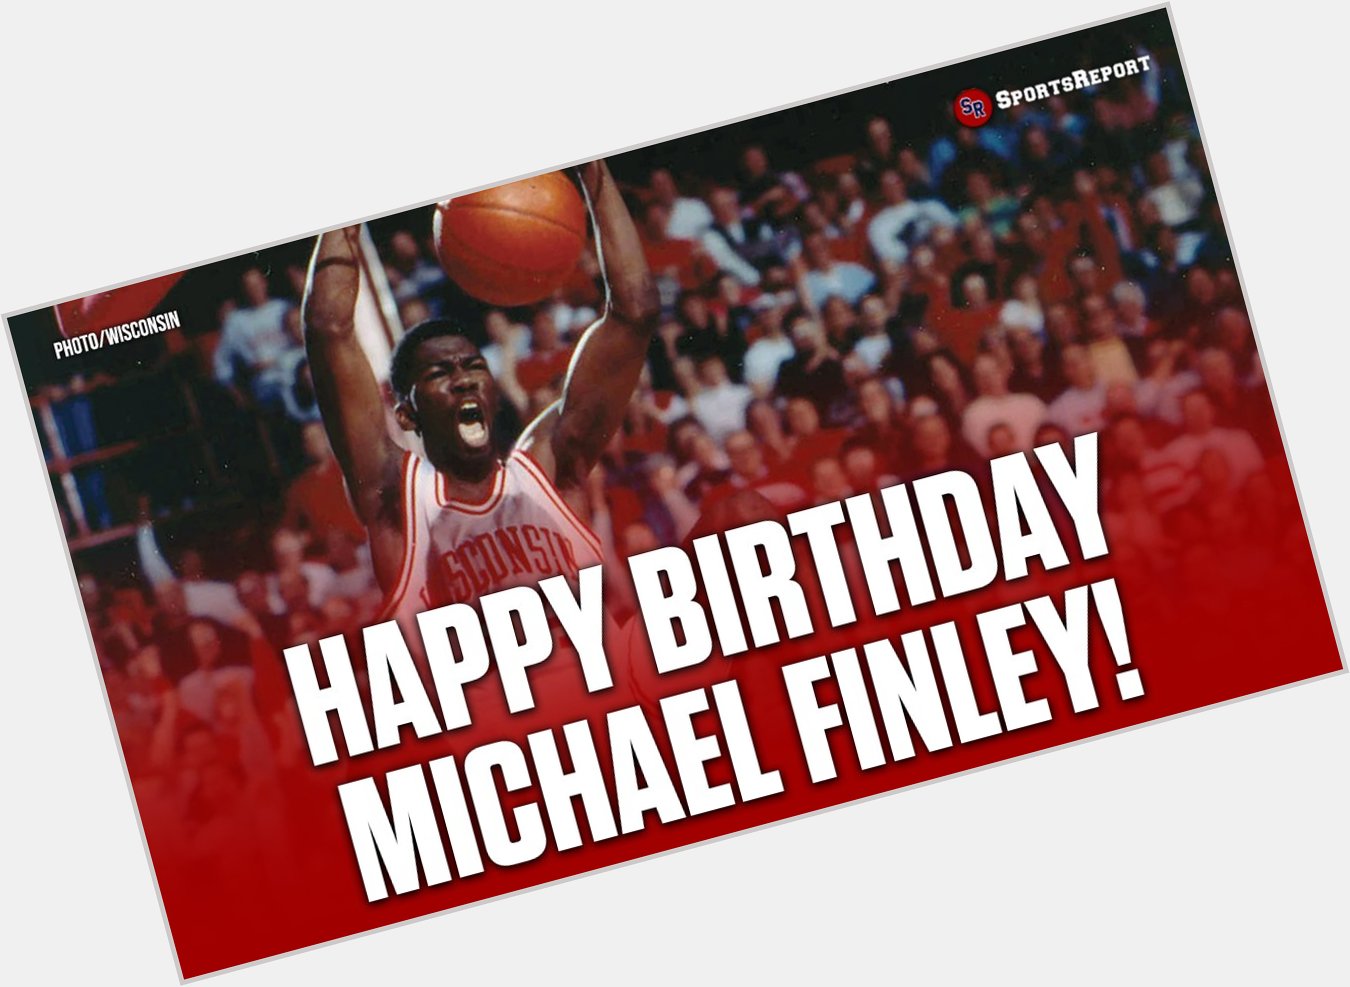  Fans, let\s wish Legend Michael Finley a Happy Birthday! 